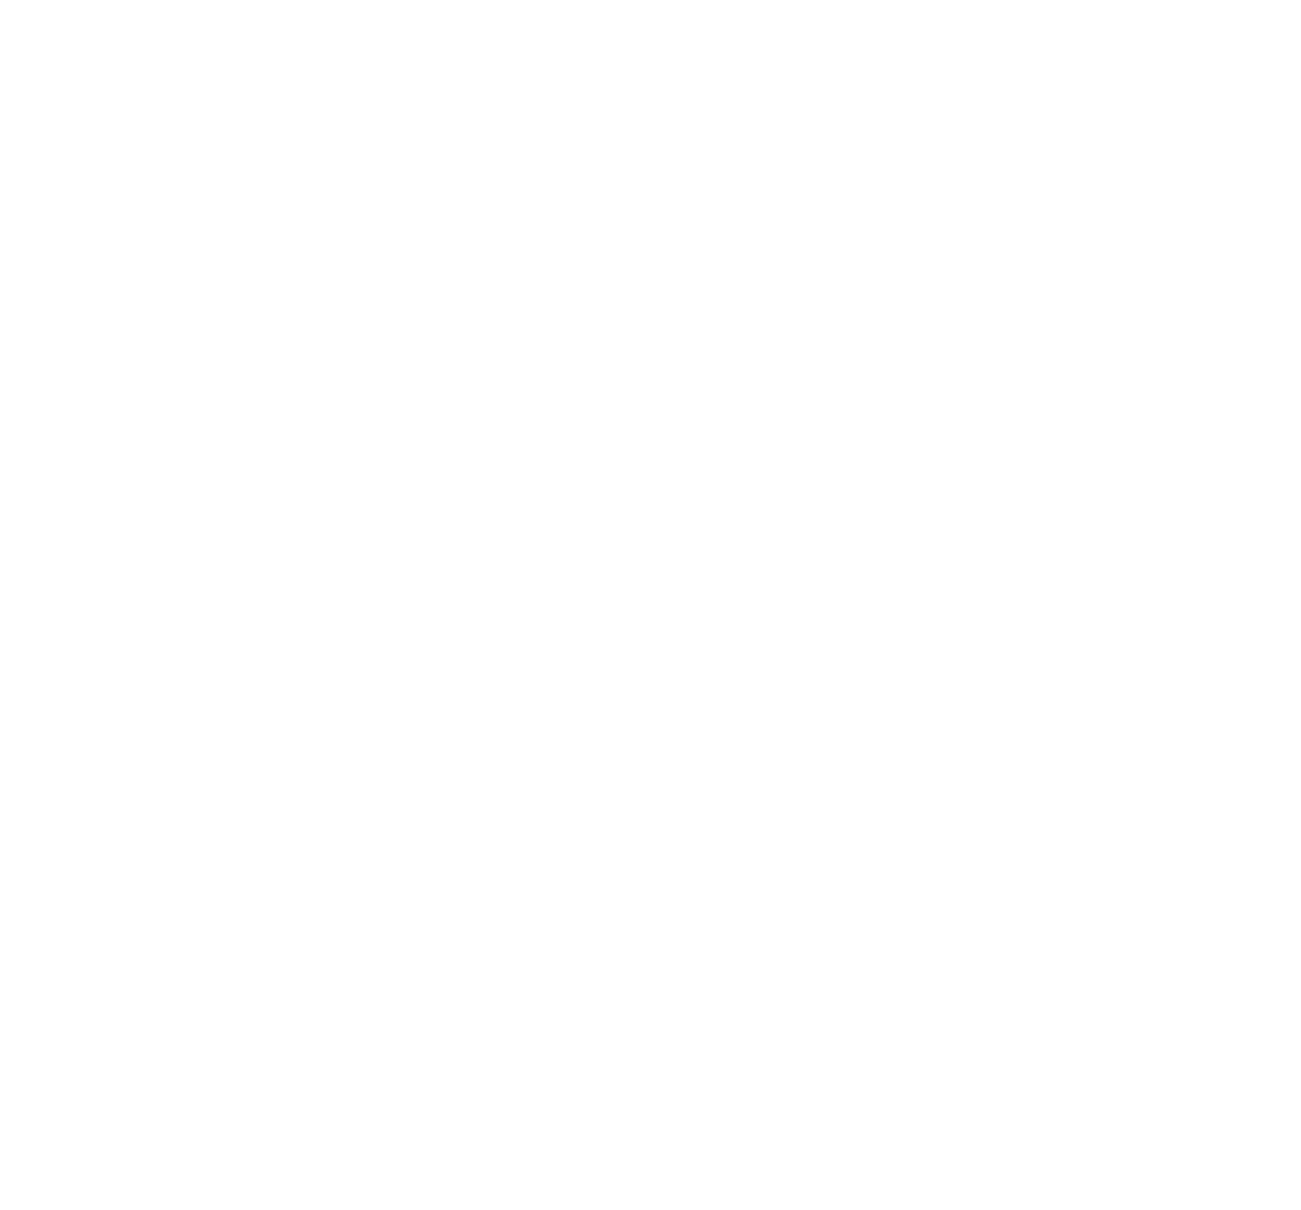 Foss Performance Materials and Eagle Nonwovens Logos surround the AJ Nonwovens logo